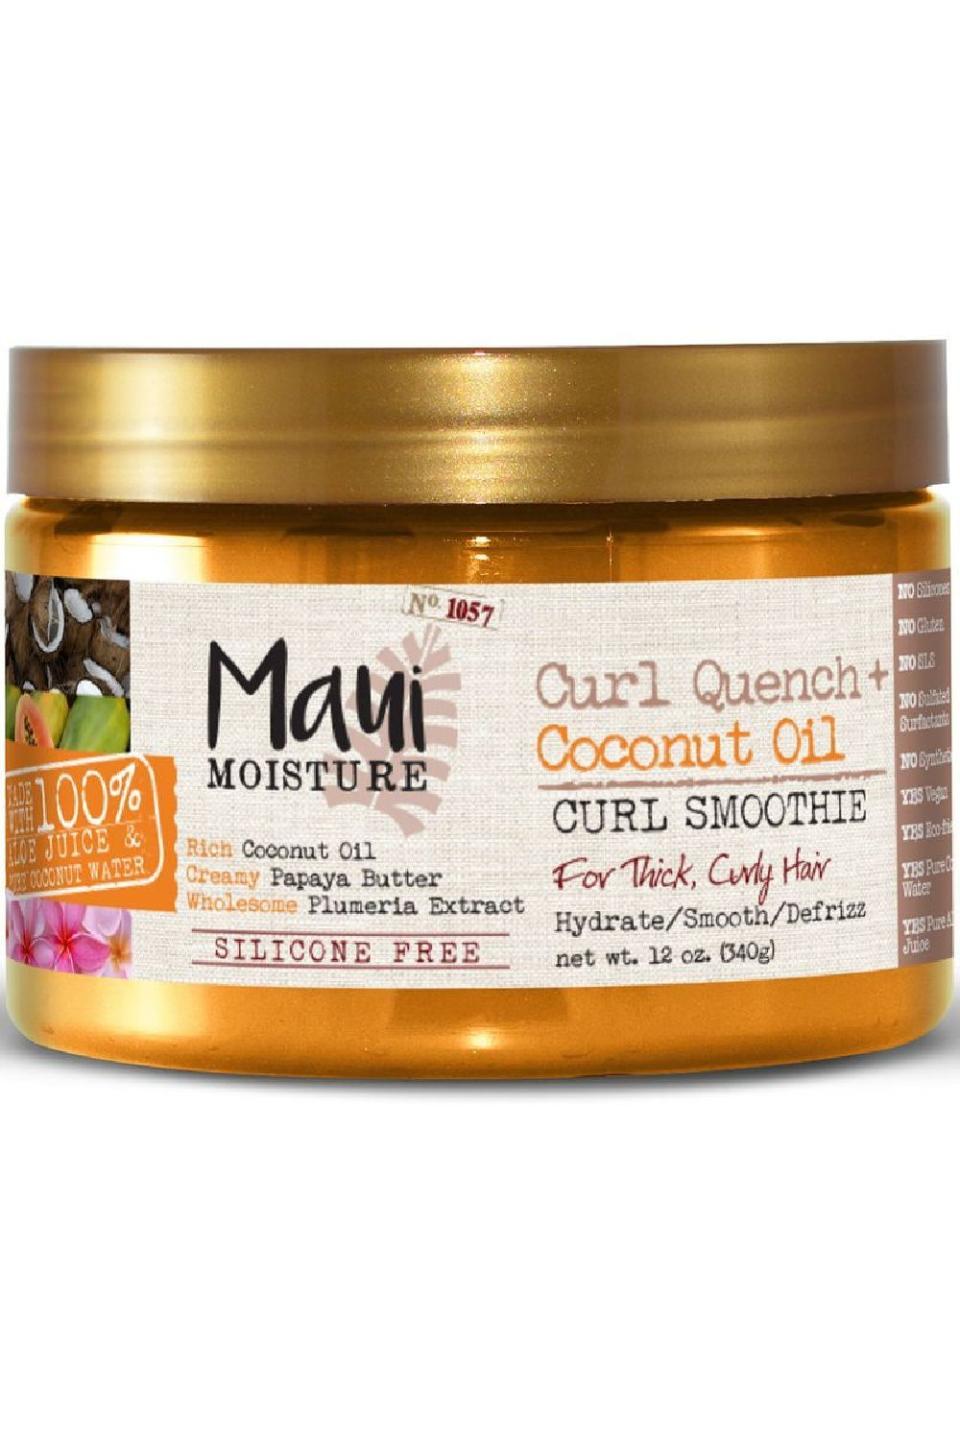 10) Maui Moisture Curl Quench +Coconut Oil Curl Smoothie